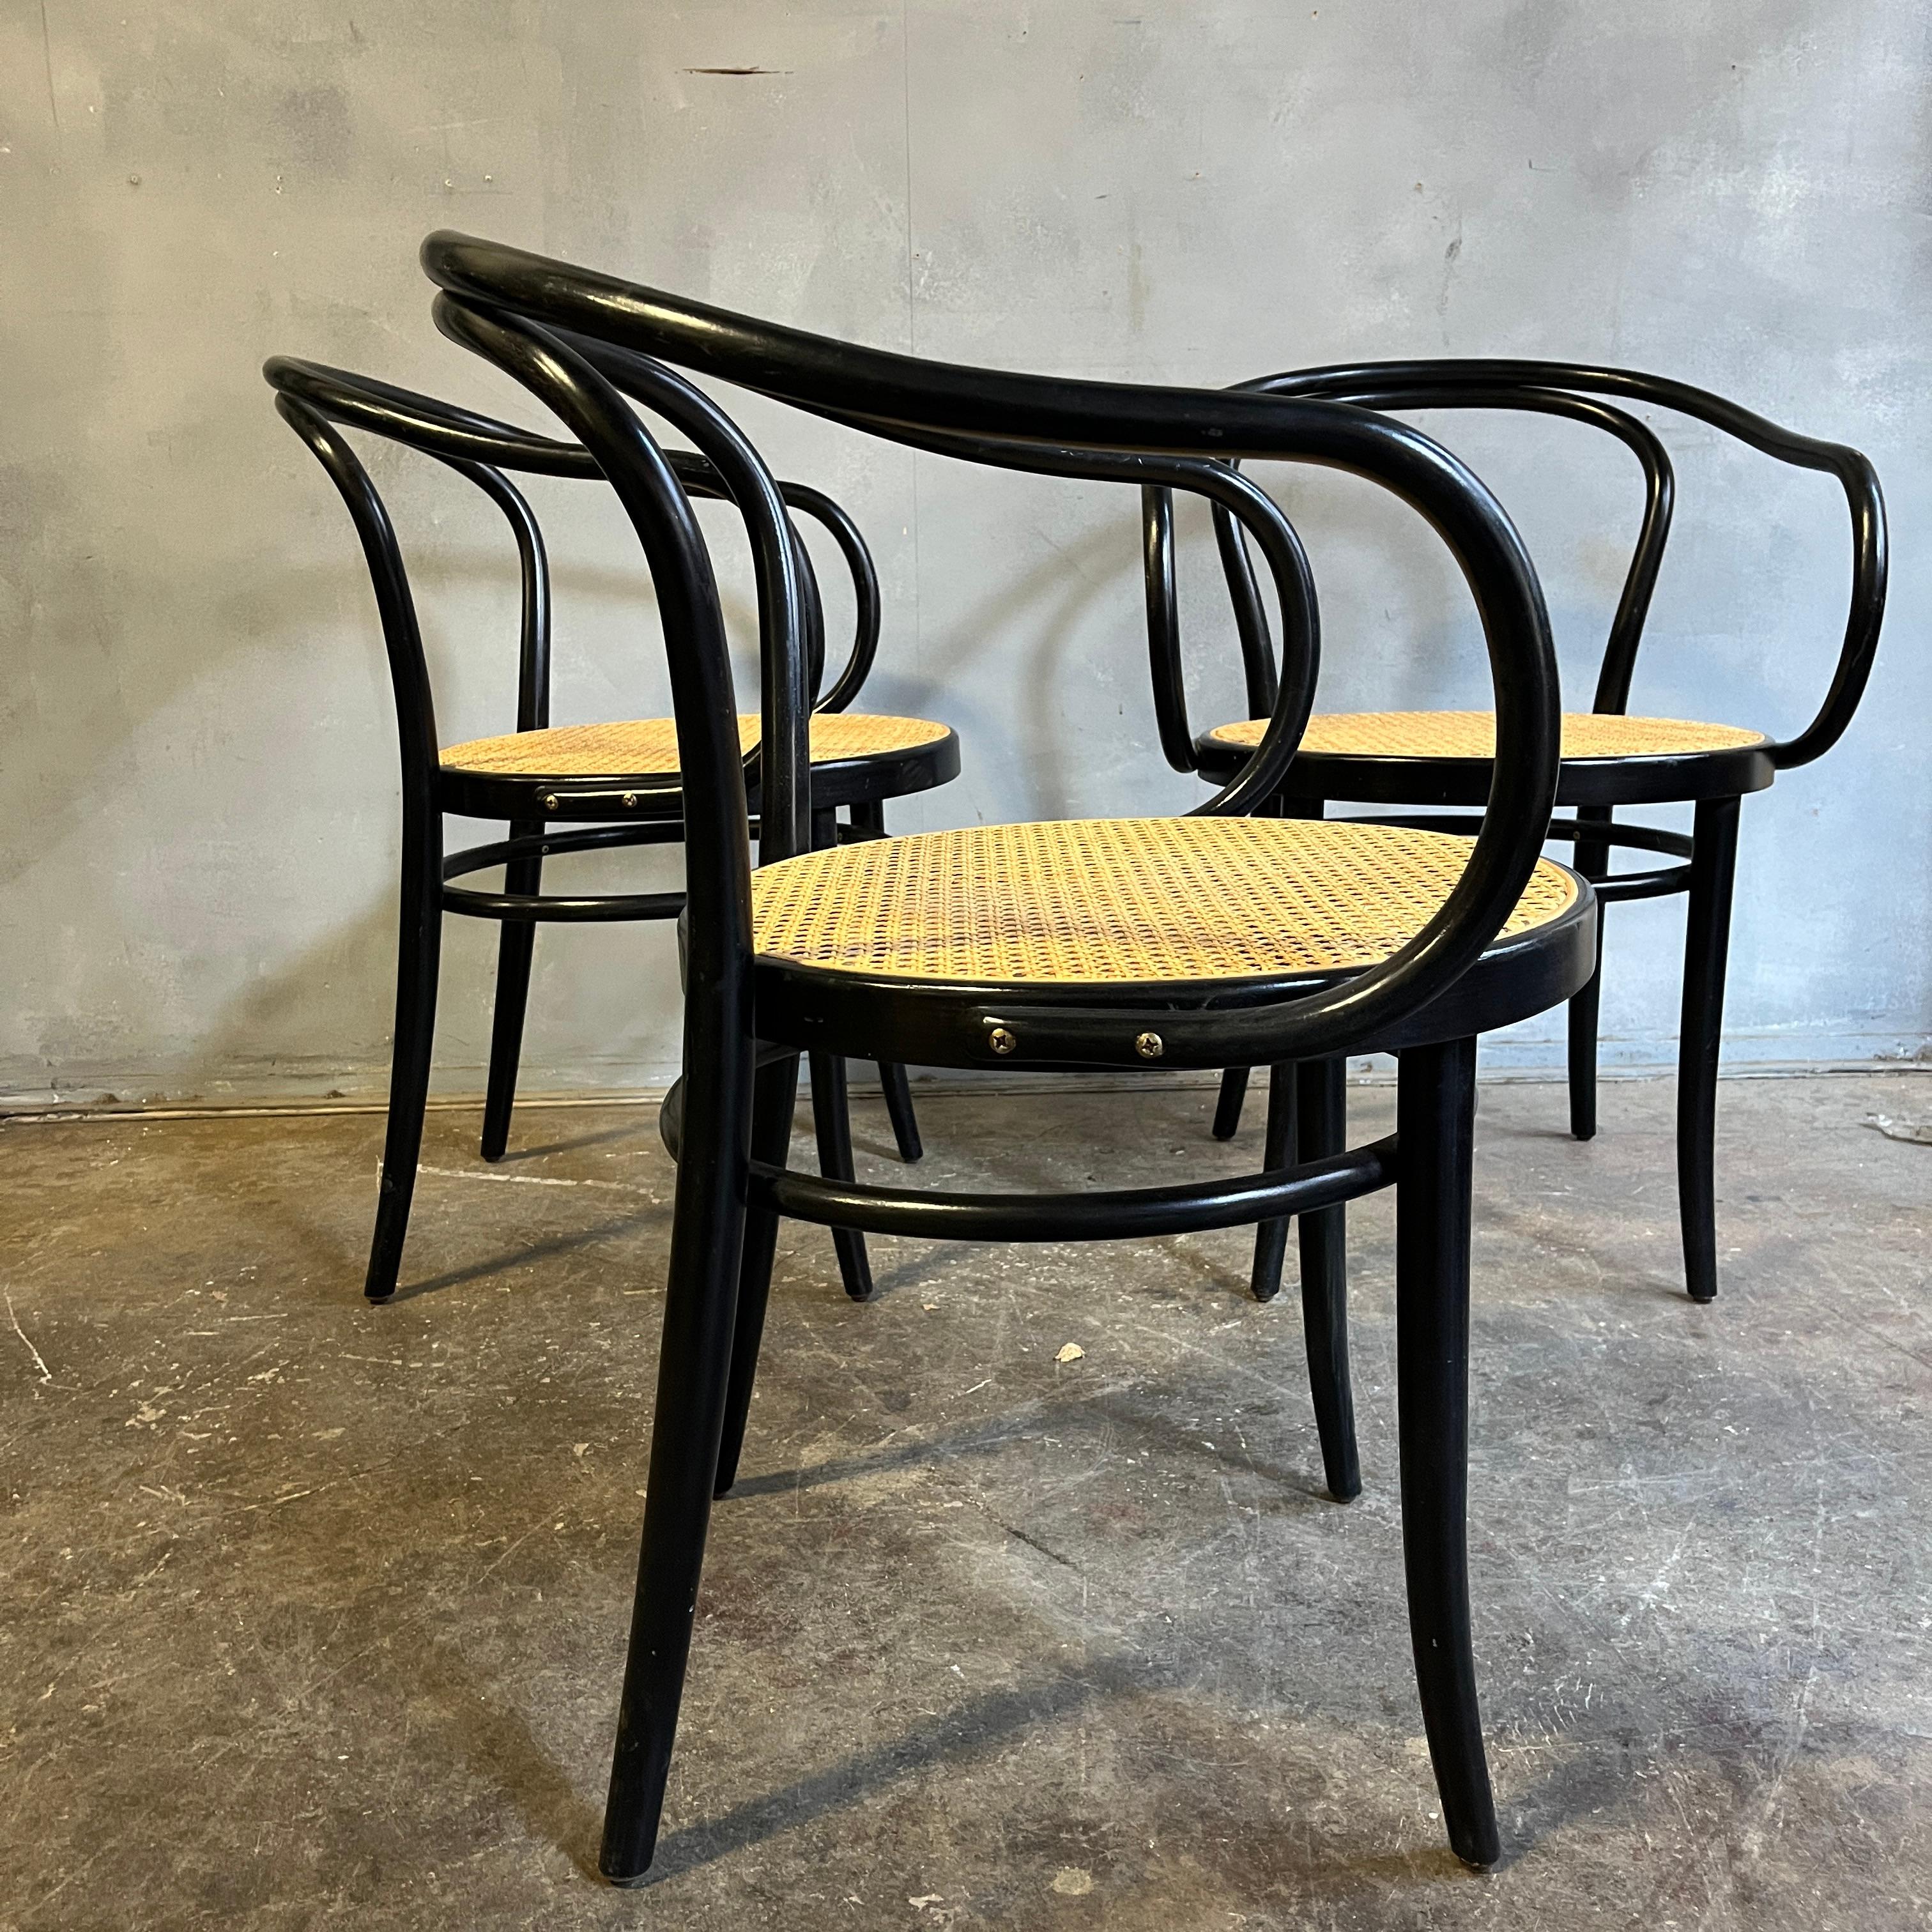 20th Century Midcentury Black No.209 Thonet Chairs, 1980s (set of 4)